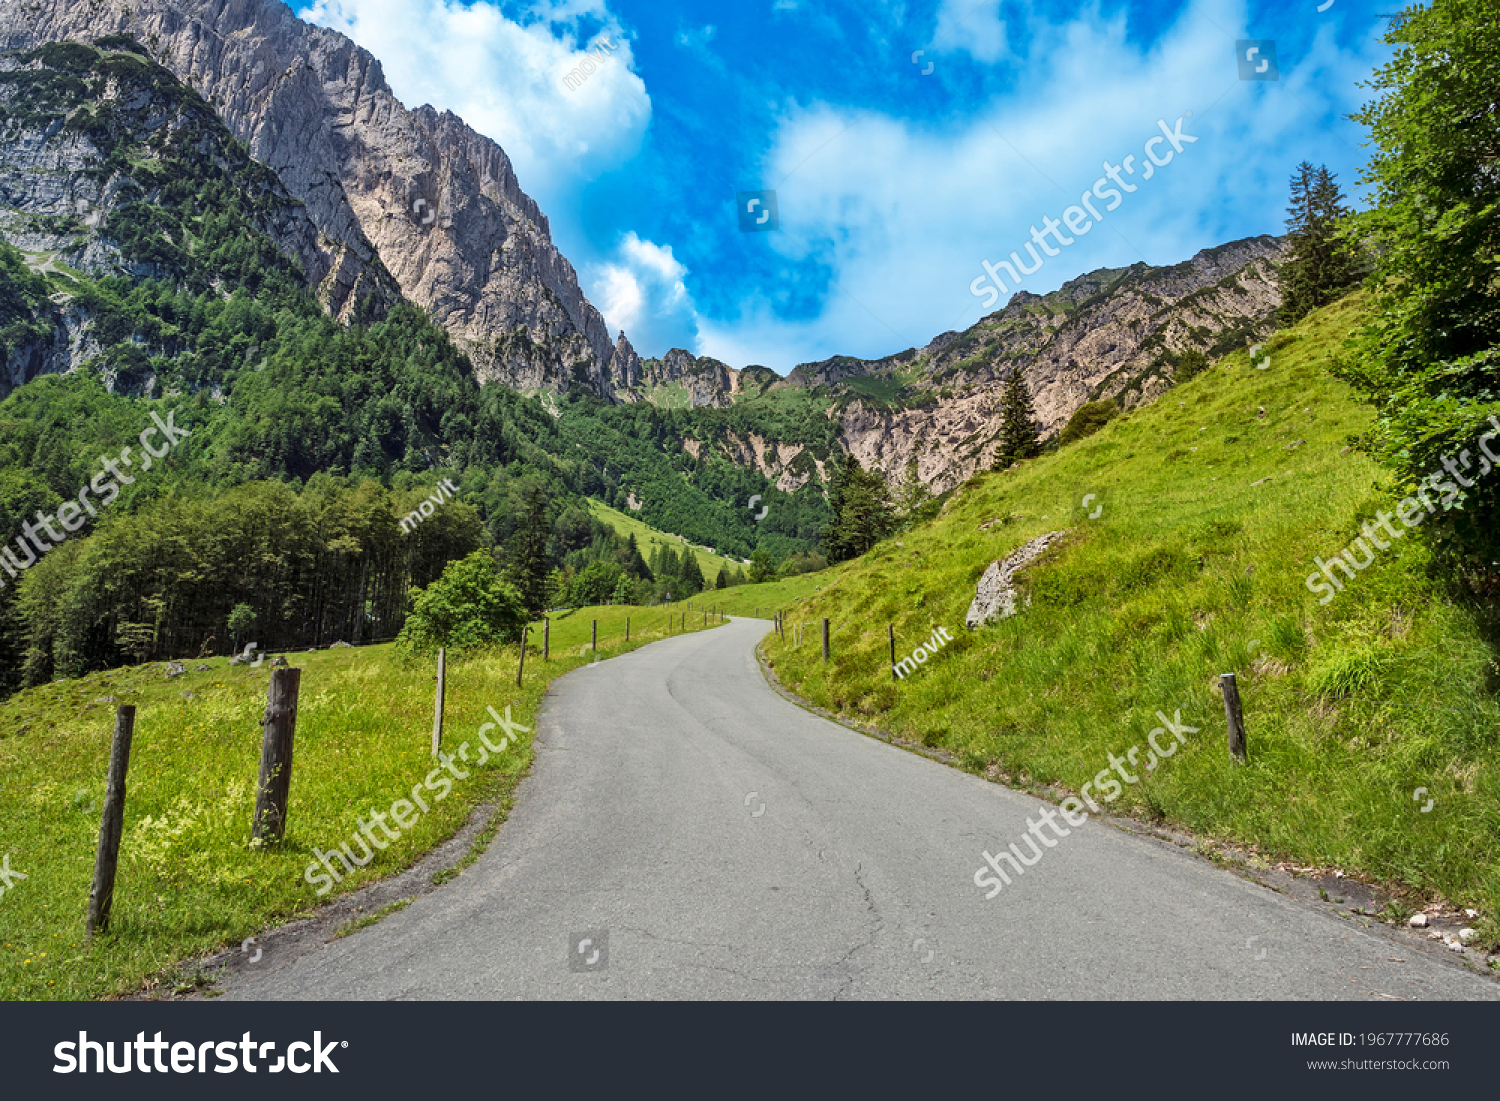 Winding mountain road through green rural alpine landscape with view on Wilder Kaiser, Austrian alps, Austria #1967777686